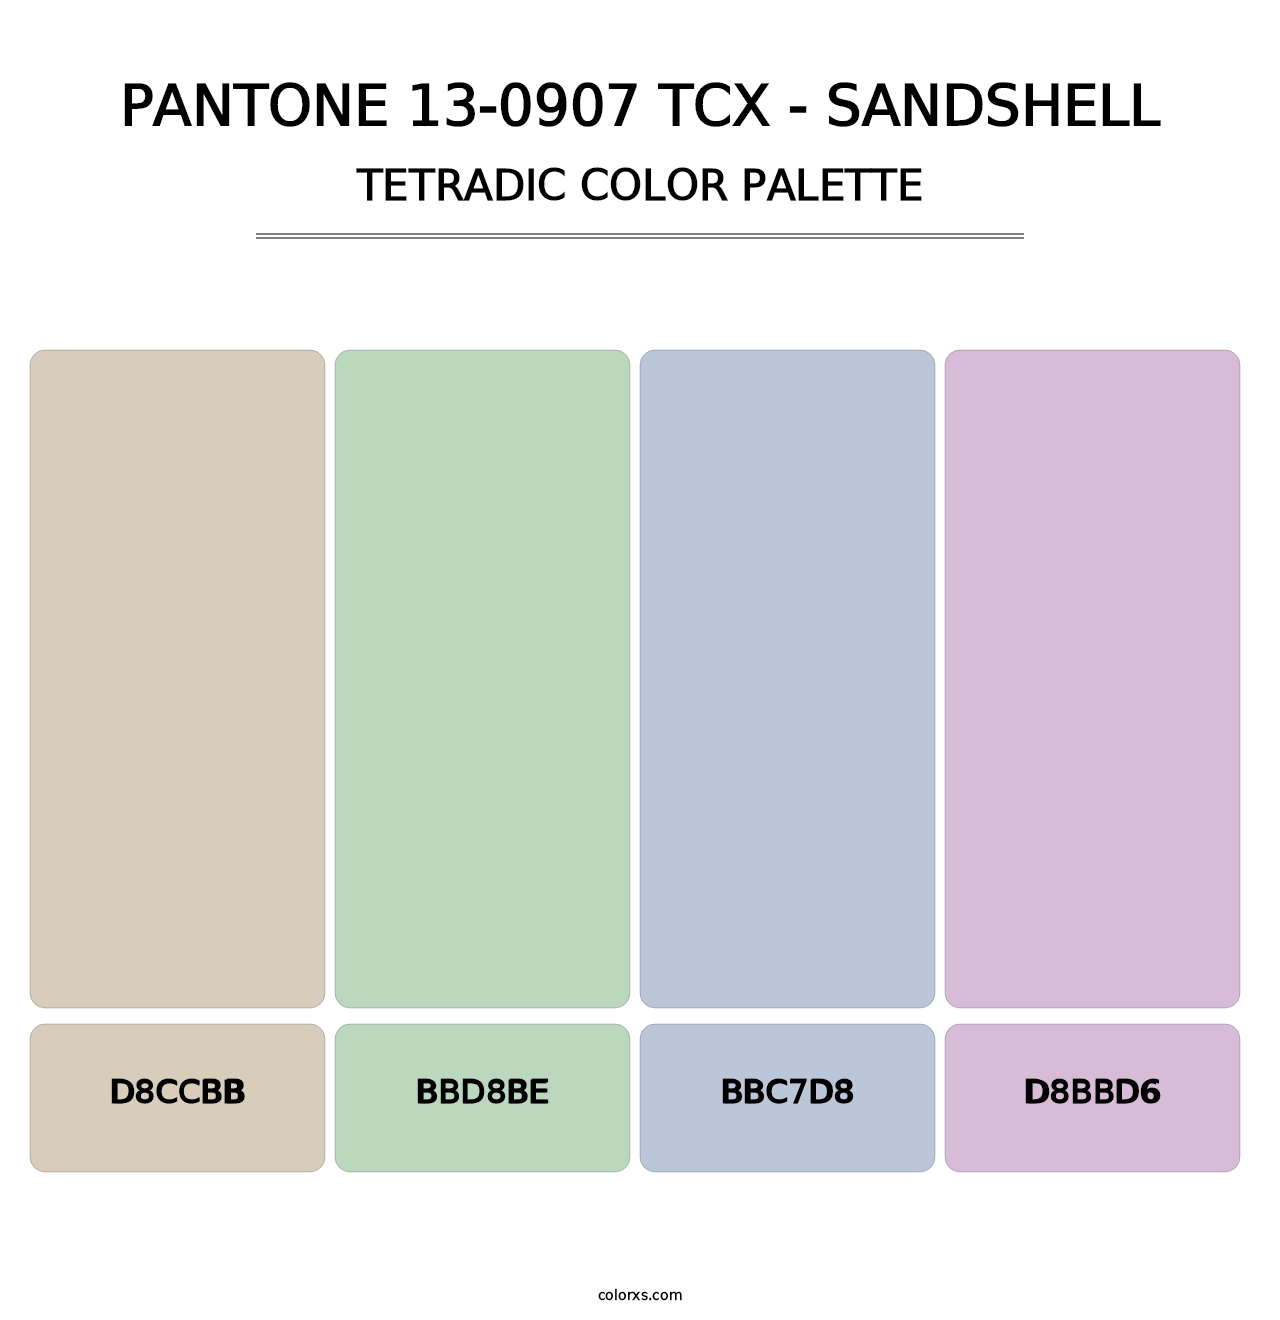 PANTONE 13-0907 TCX - Sandshell - Tetradic Color Palette